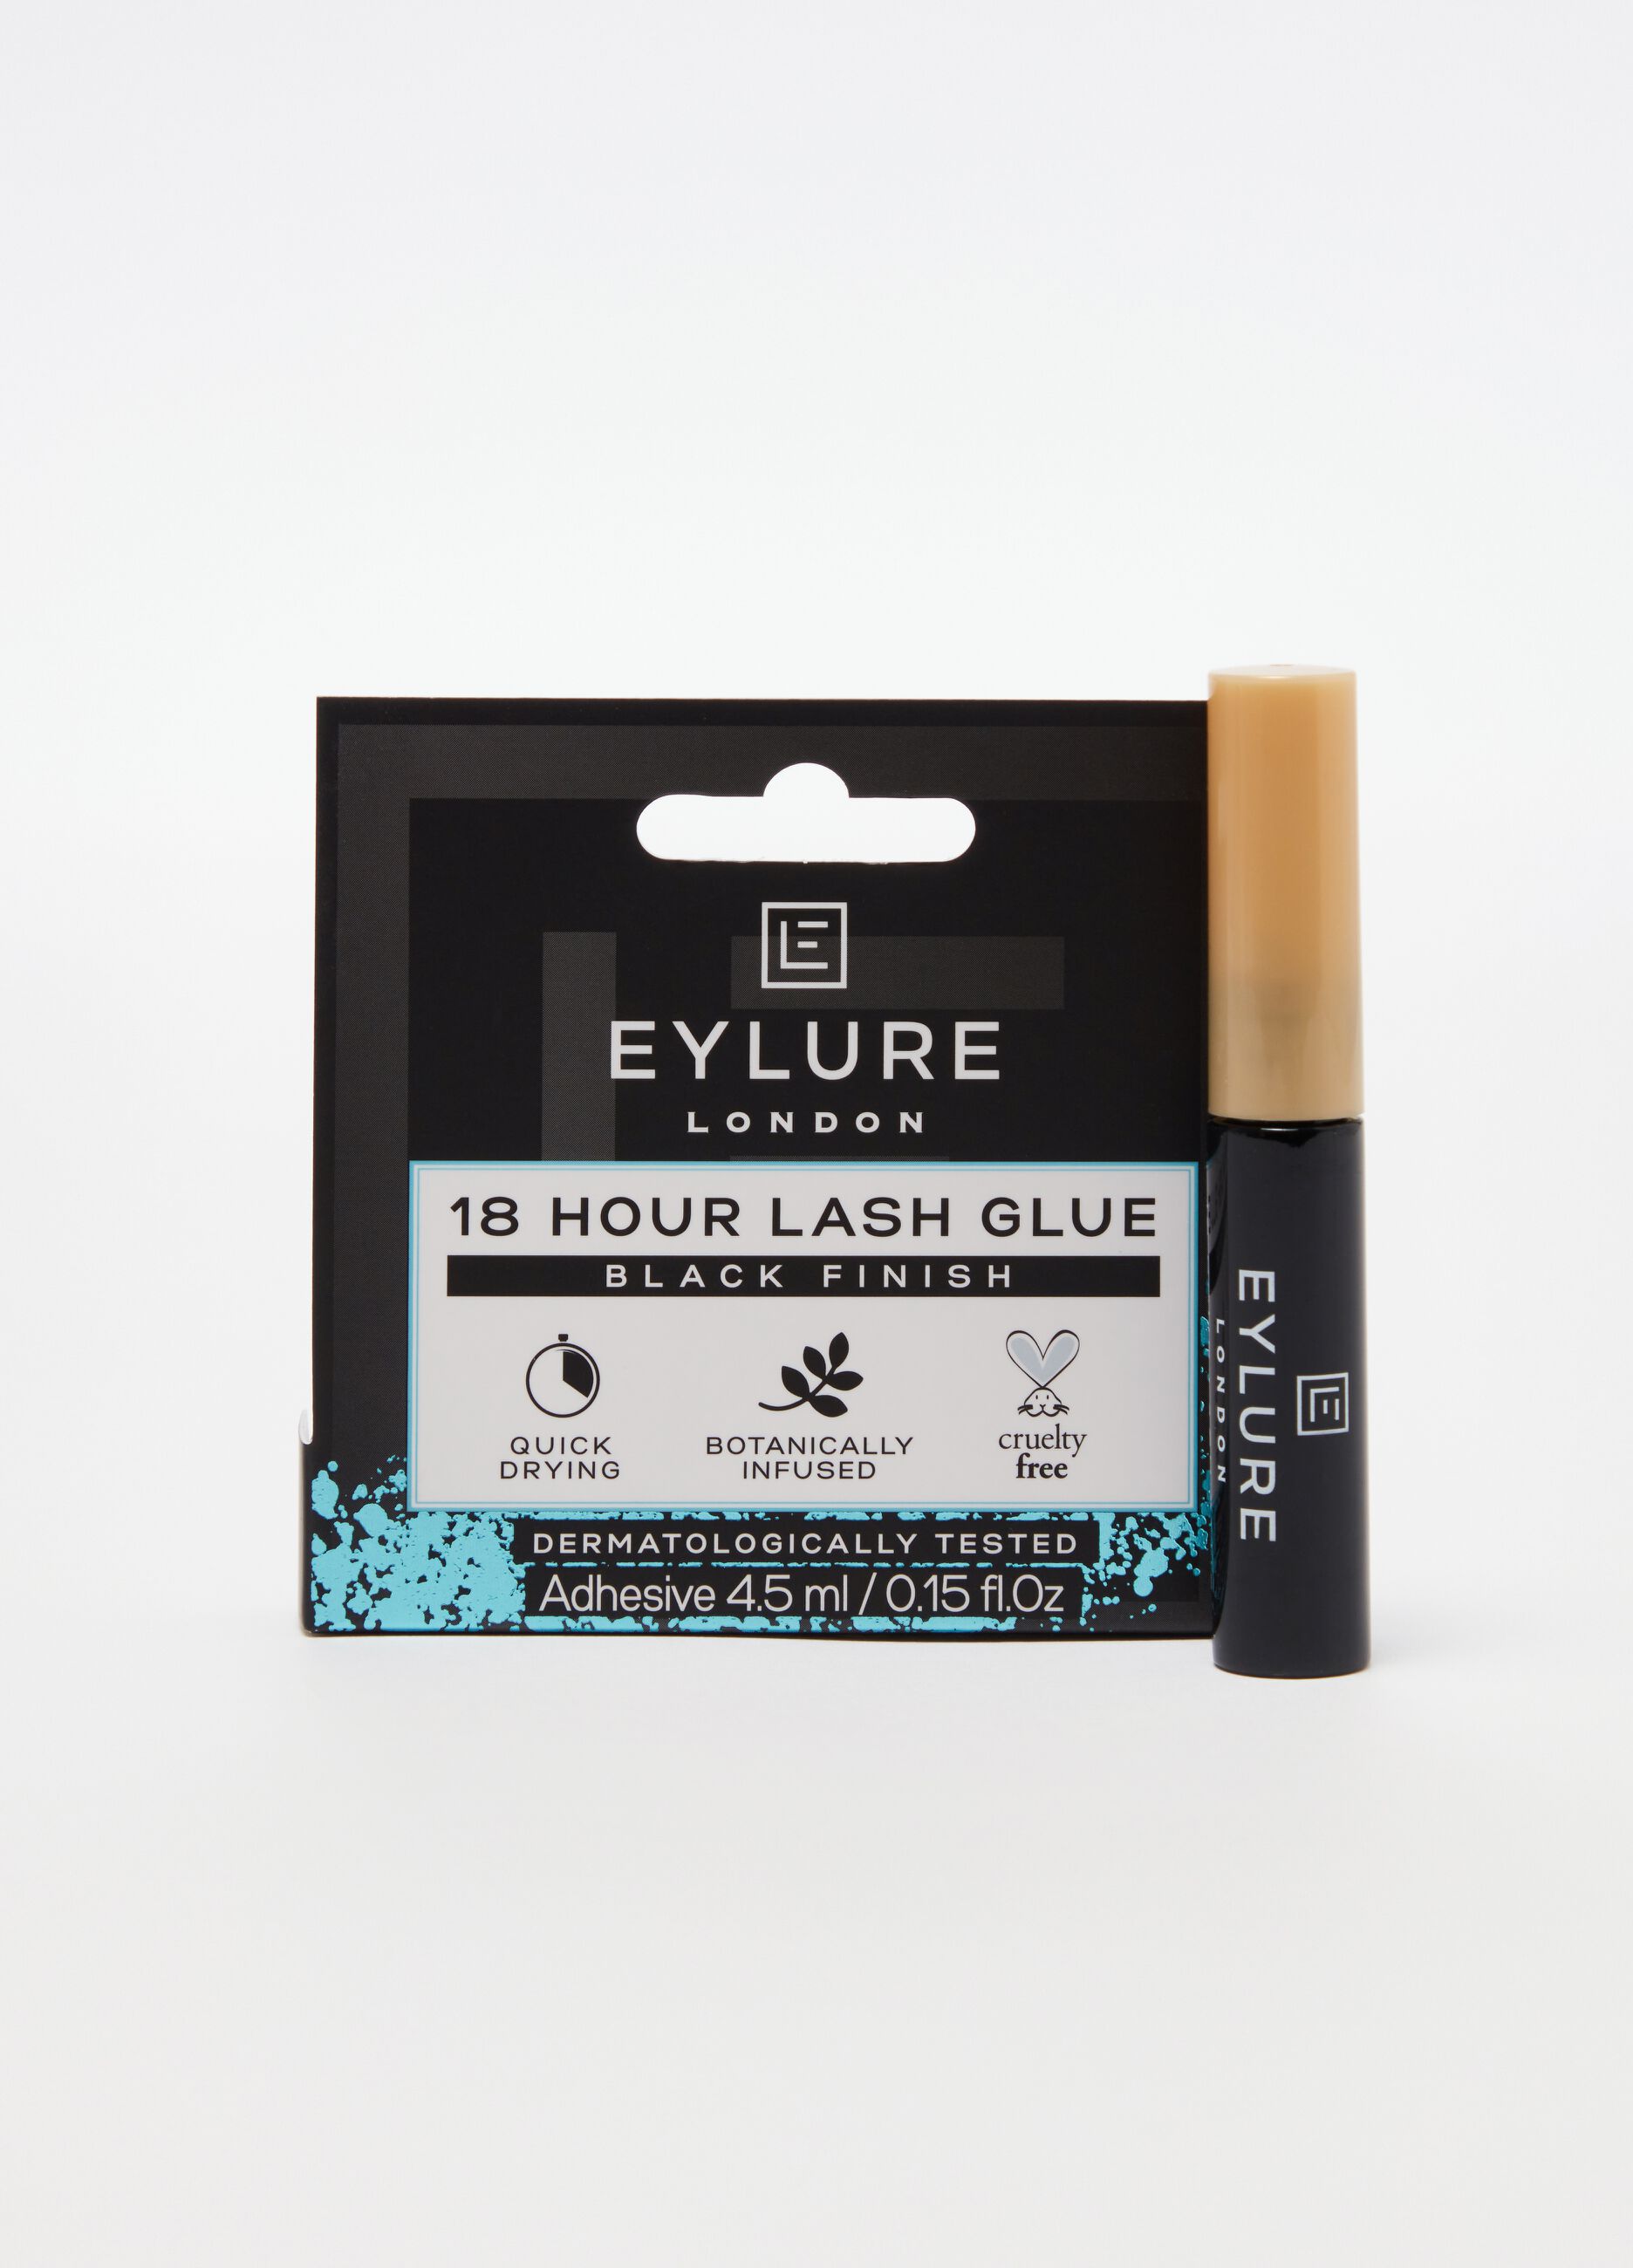 Clear Finish 18 Hour Eyelash Glue - Eylure